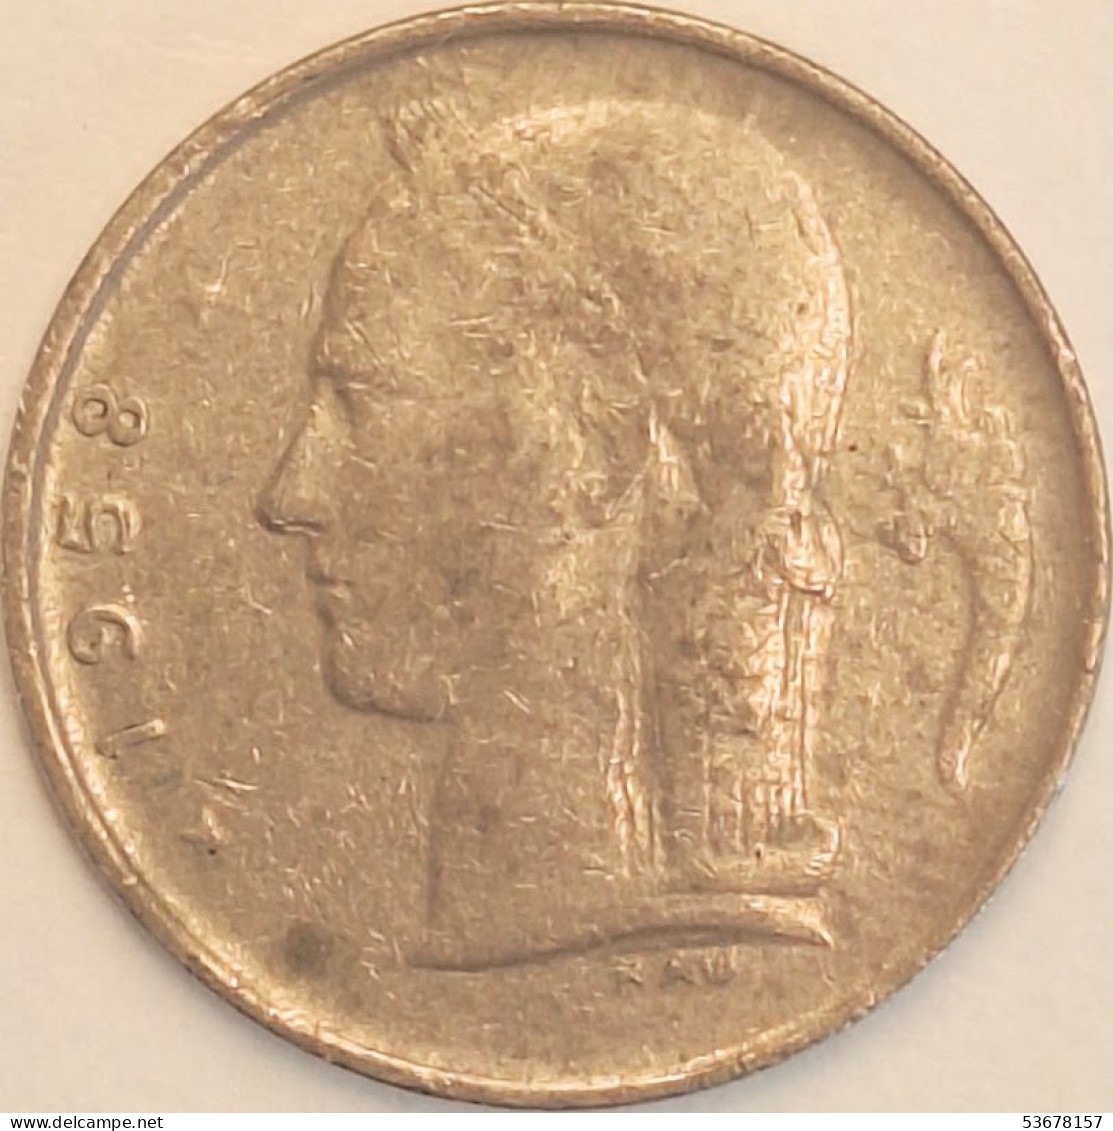 Belgium - Franc 1958, KM# 142.1 (#3107) - 1 Franc